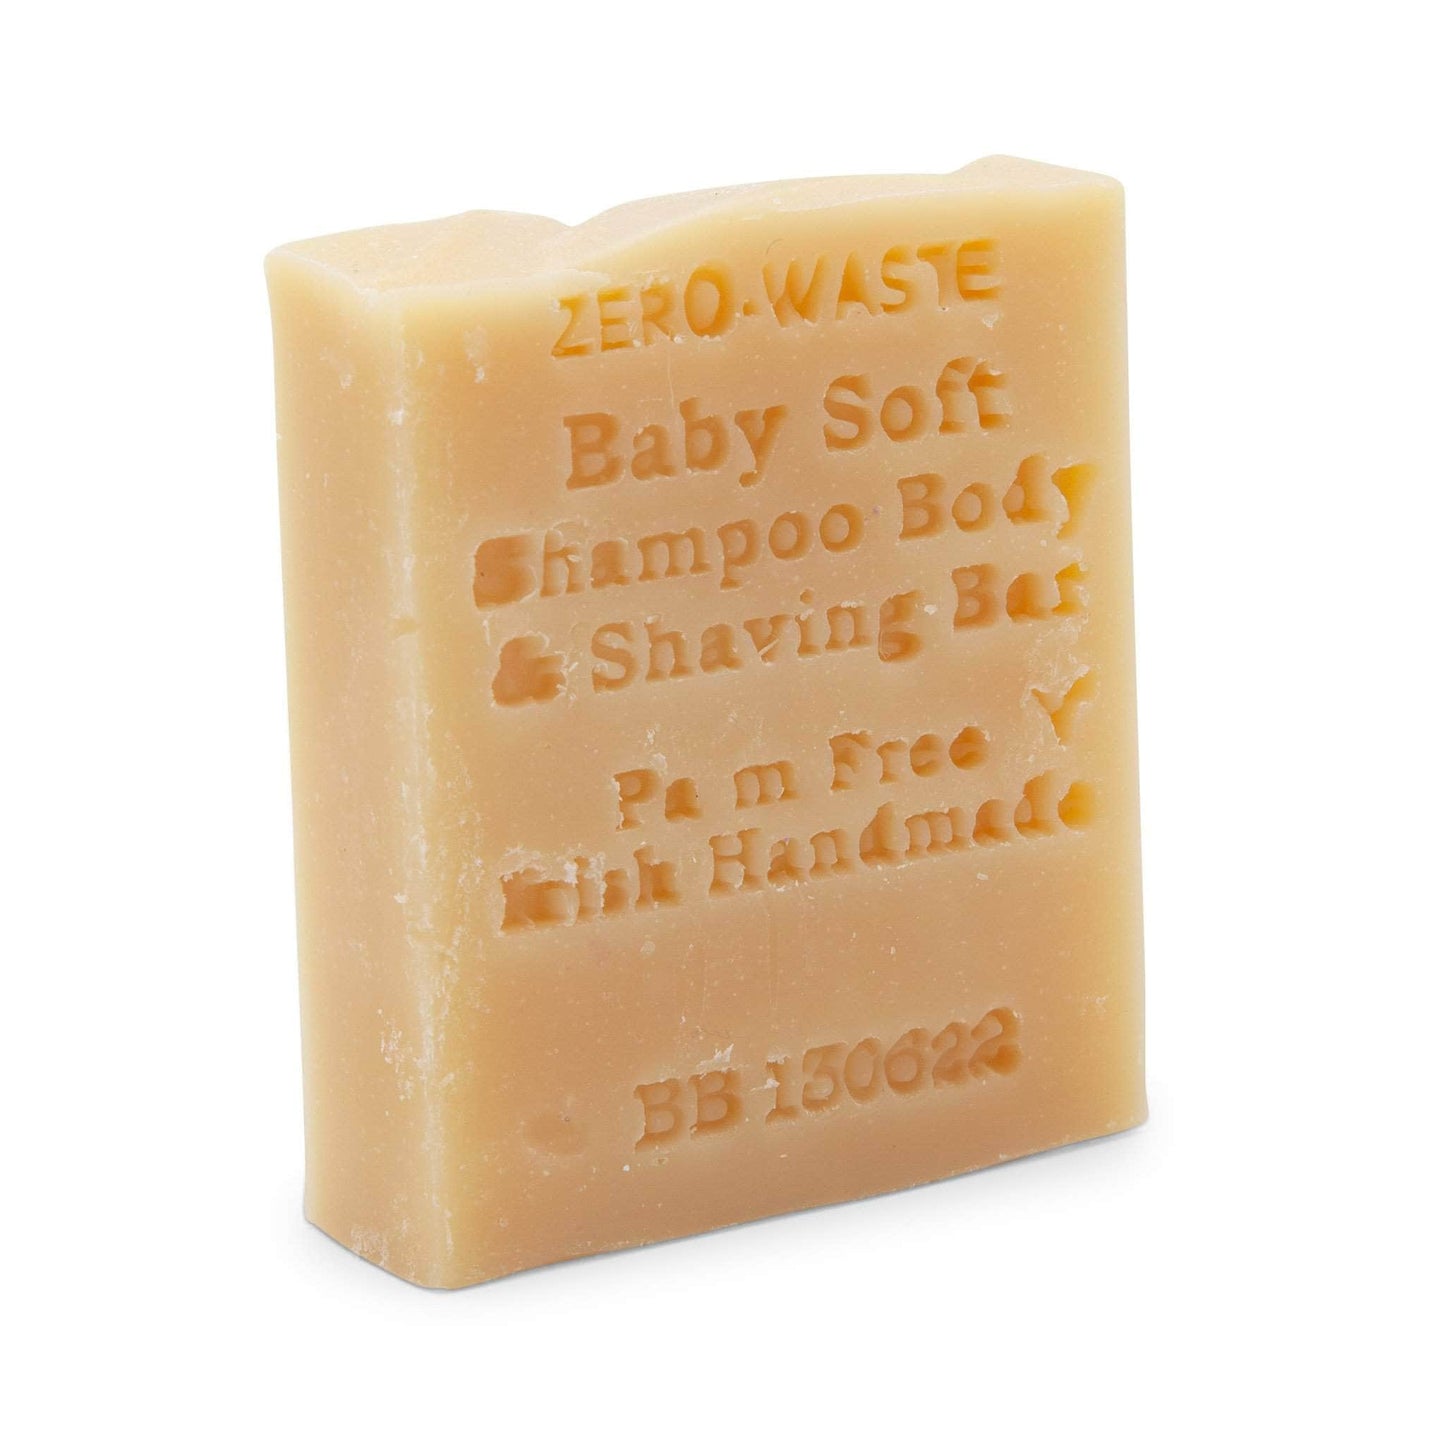 Palm Free Irish Soap Soap Palm Free Zero Waste Handmade Soap - Baby Soft Shampoo Bar